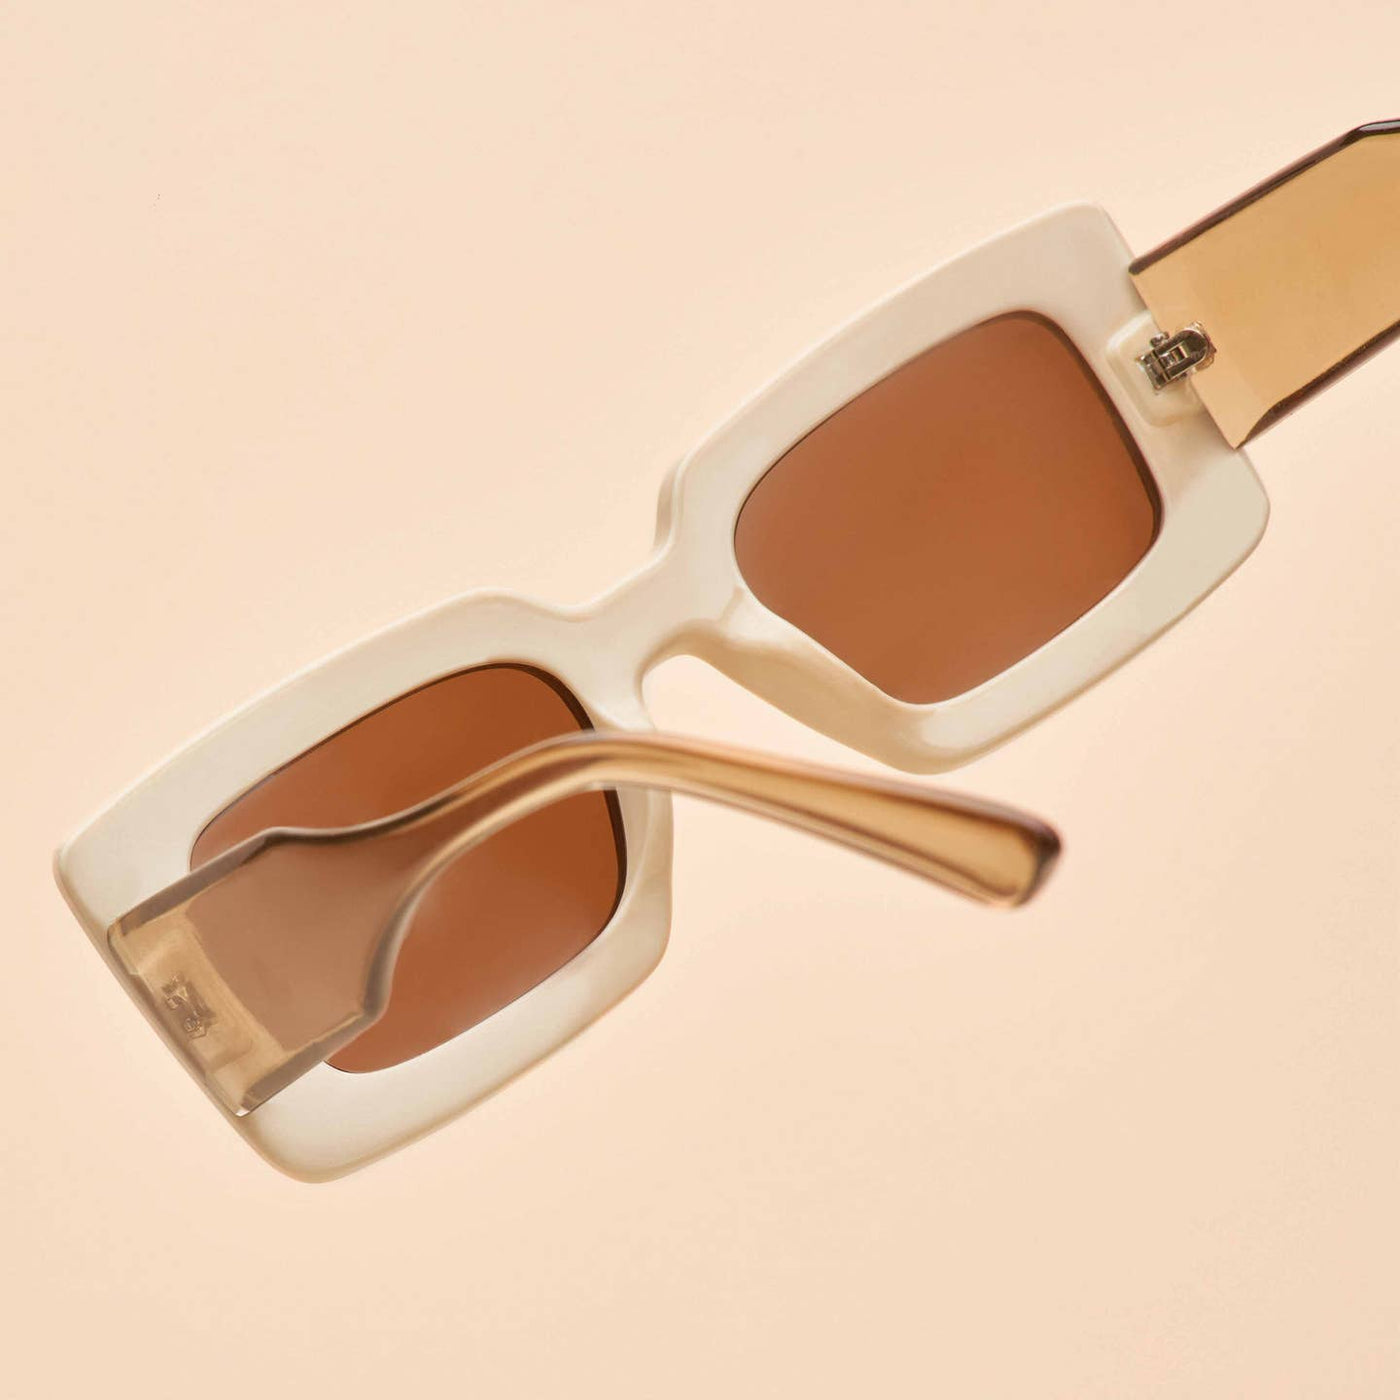 Andi Limited Edition Sunglasses - Terracotta